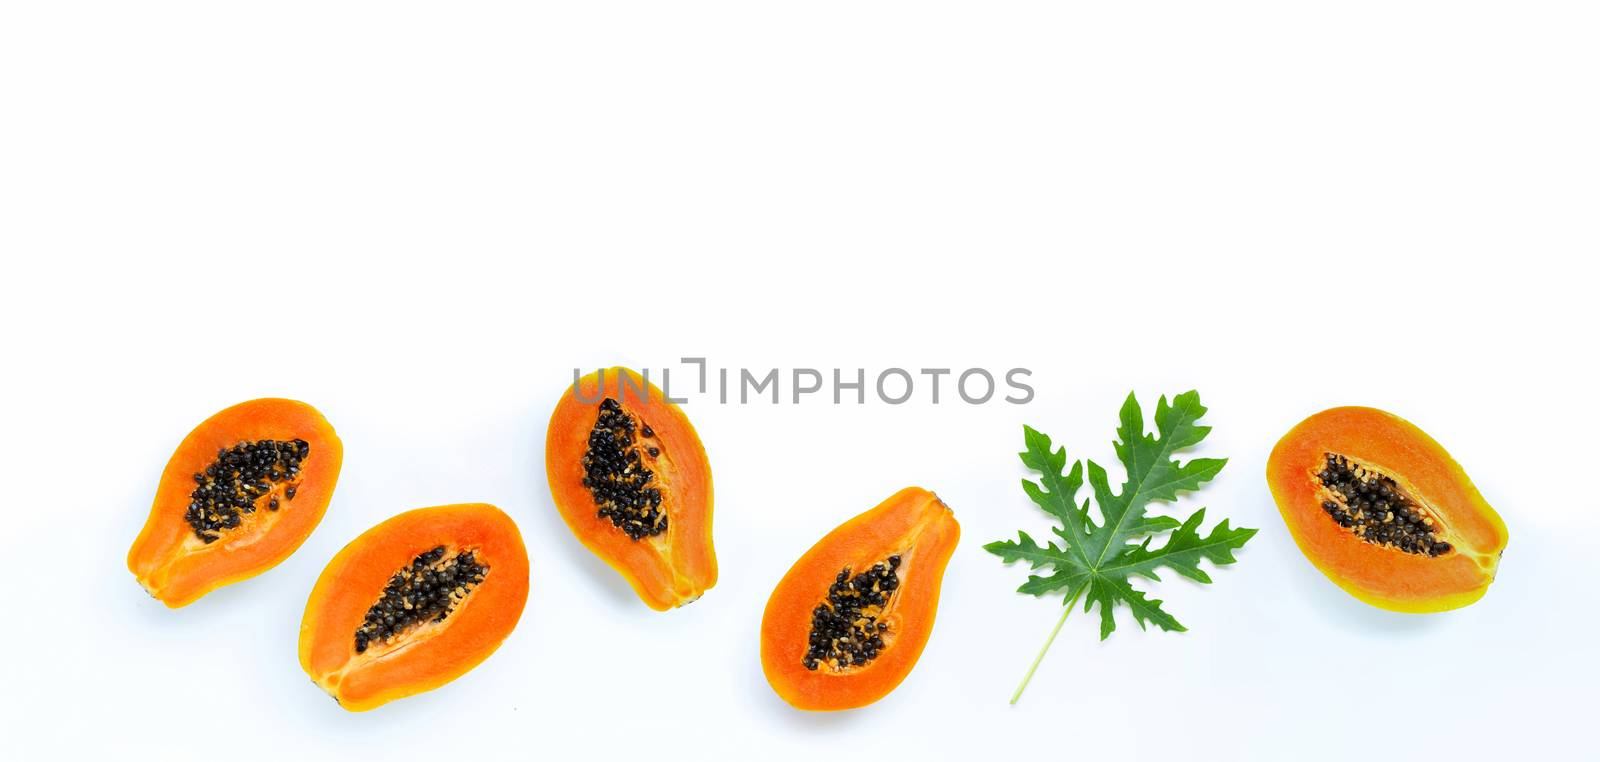 Papaya fruit on white background. Top view